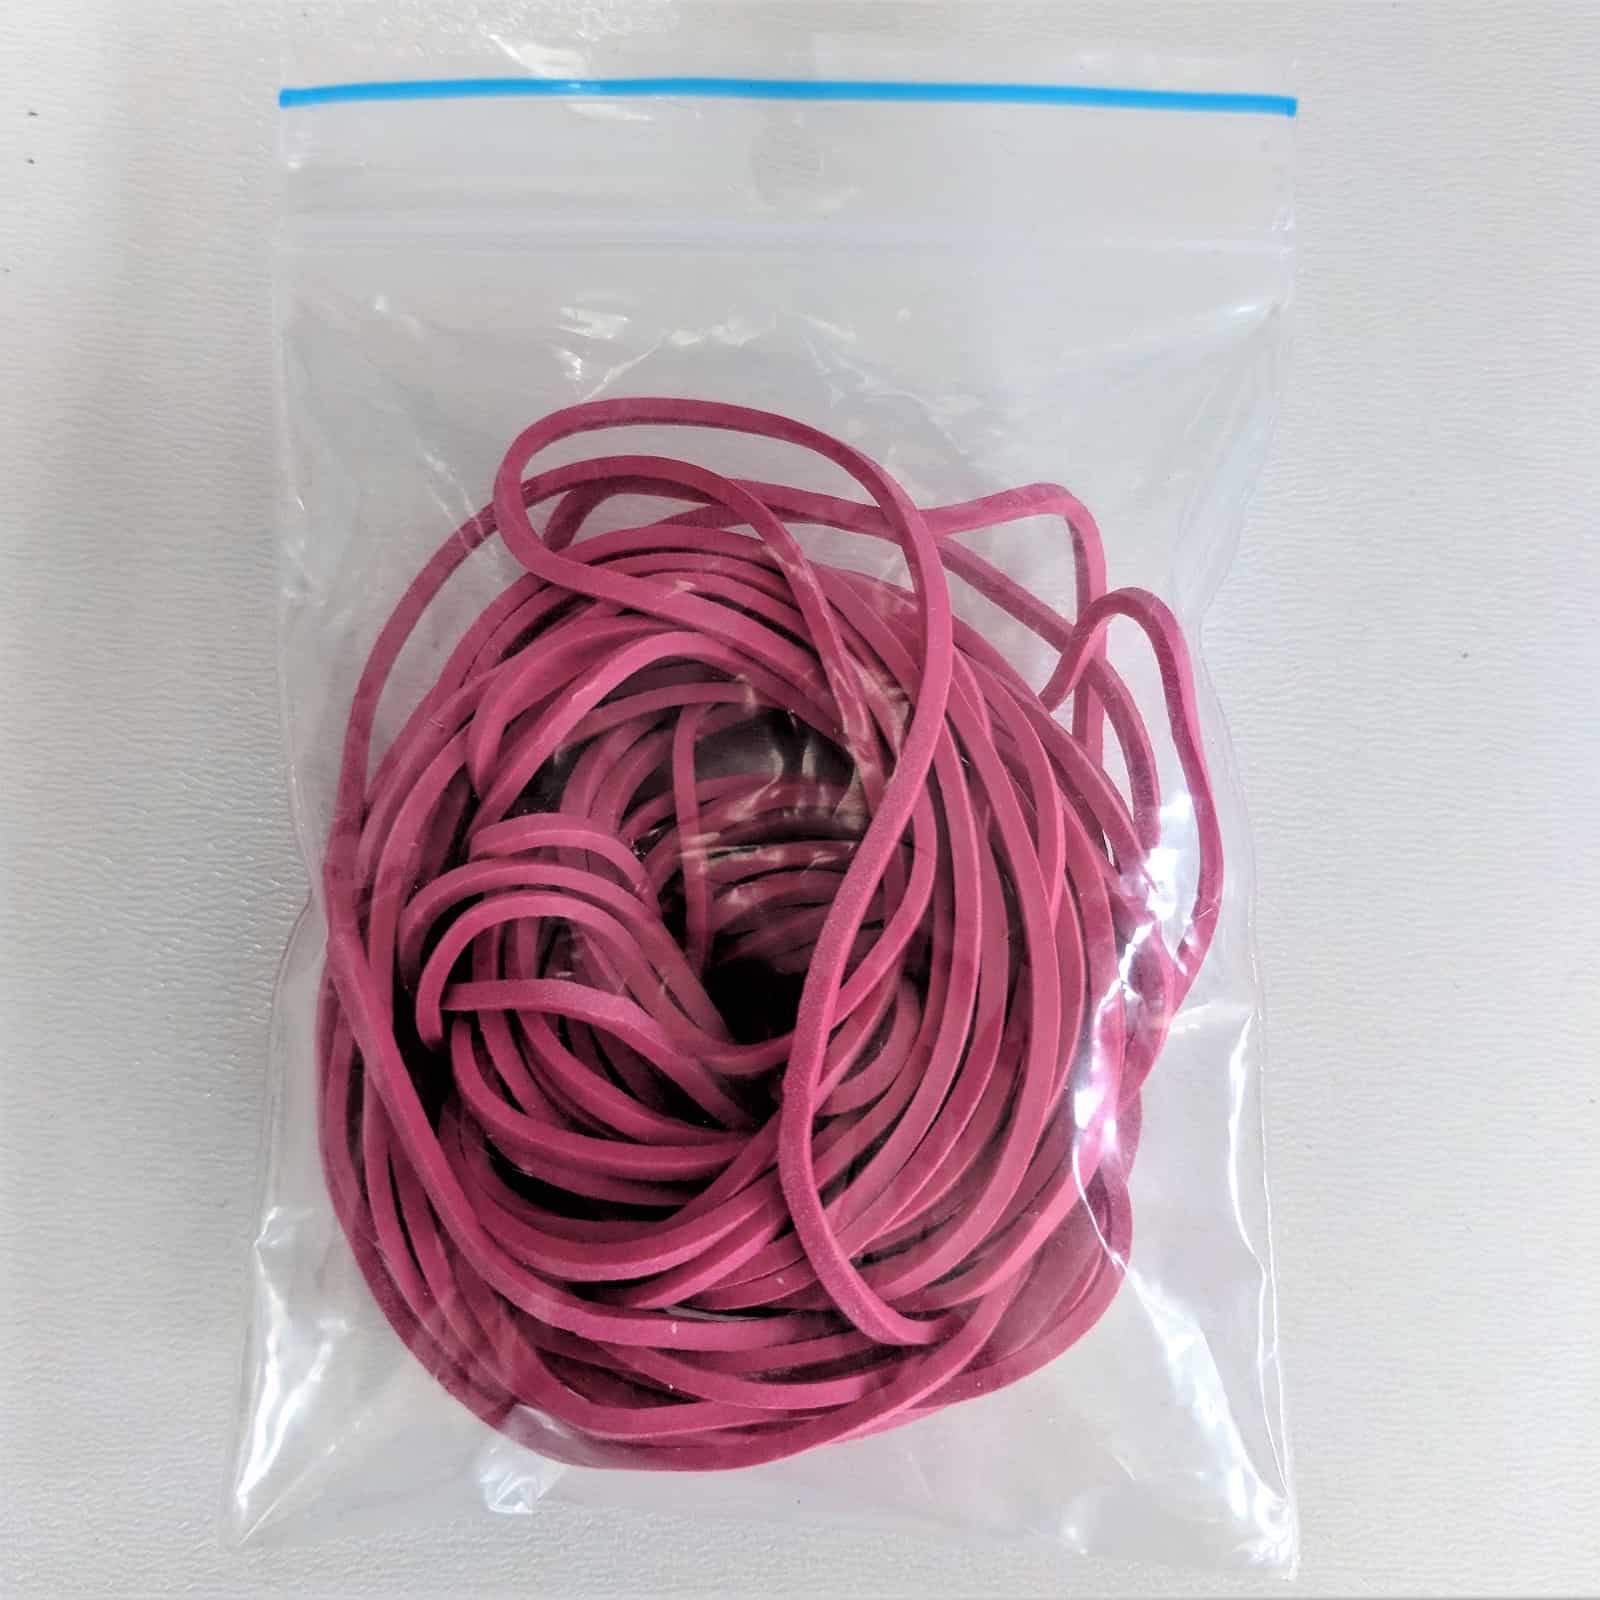 Omleiding Algebraïsch bijstand Gekleurde elastiekjes - Roze Groen Blauw Zwart Geel - € 1,- per zakje